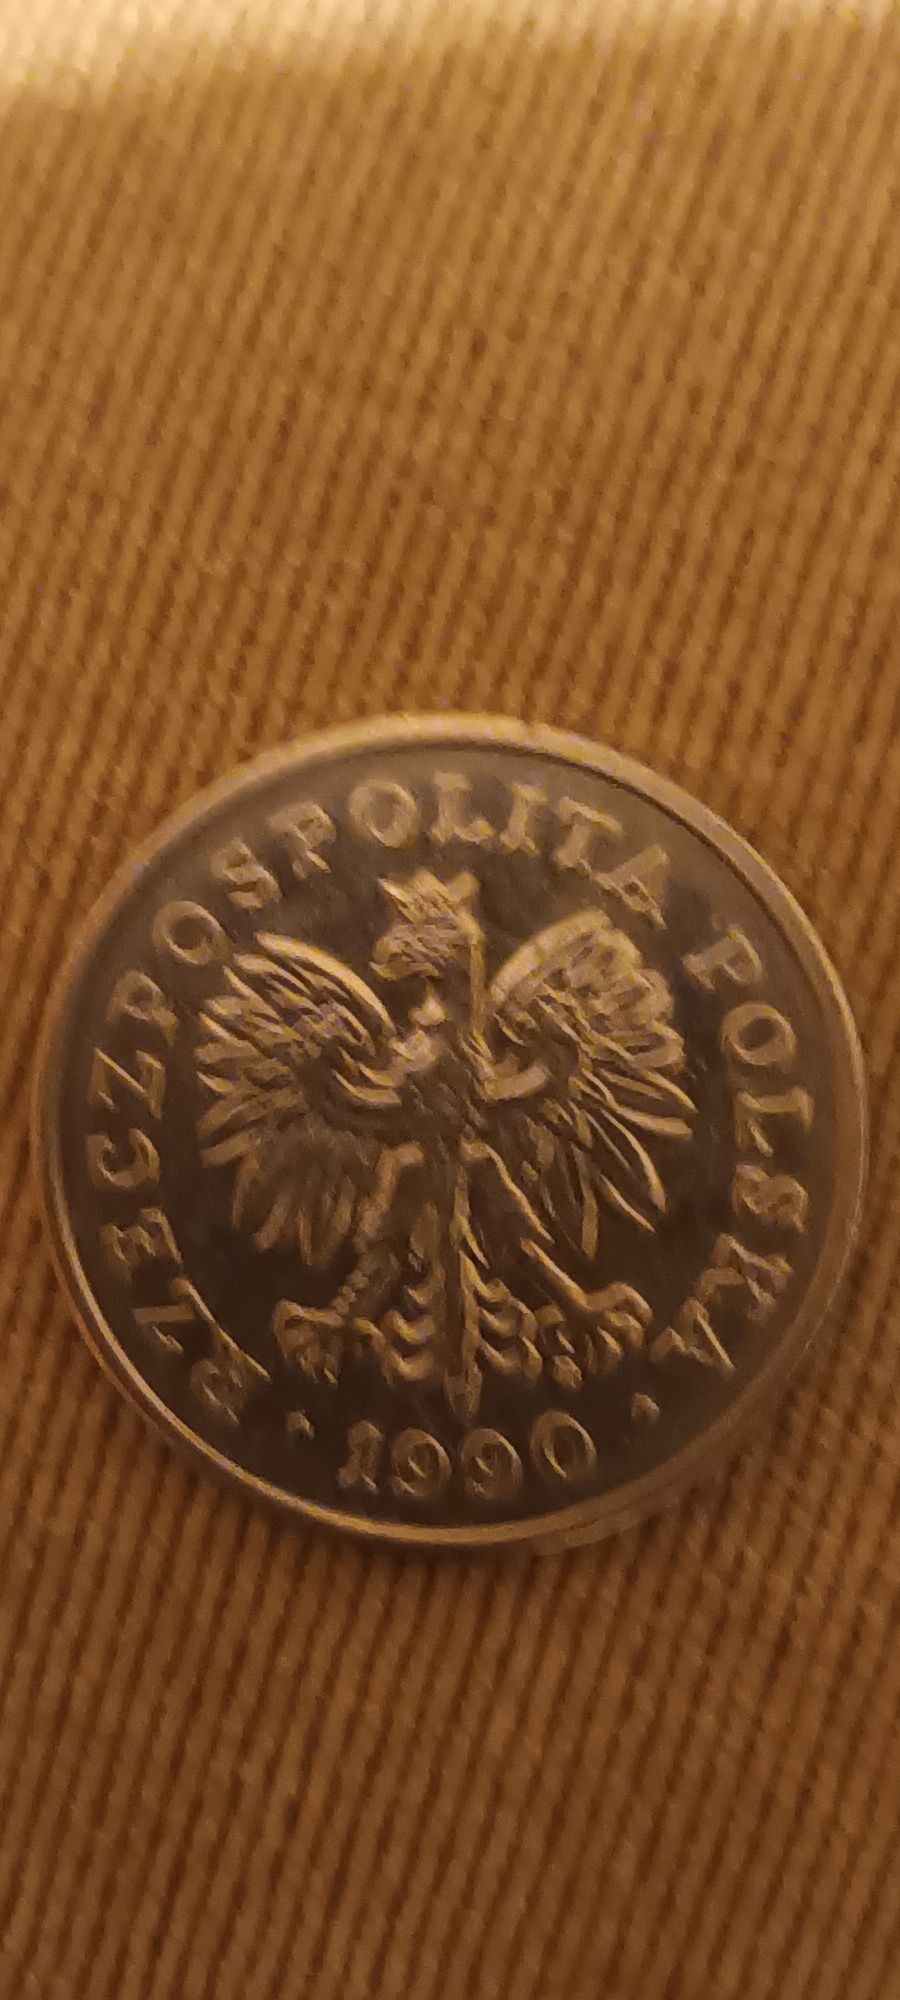 Moneta 50zl z 1990r